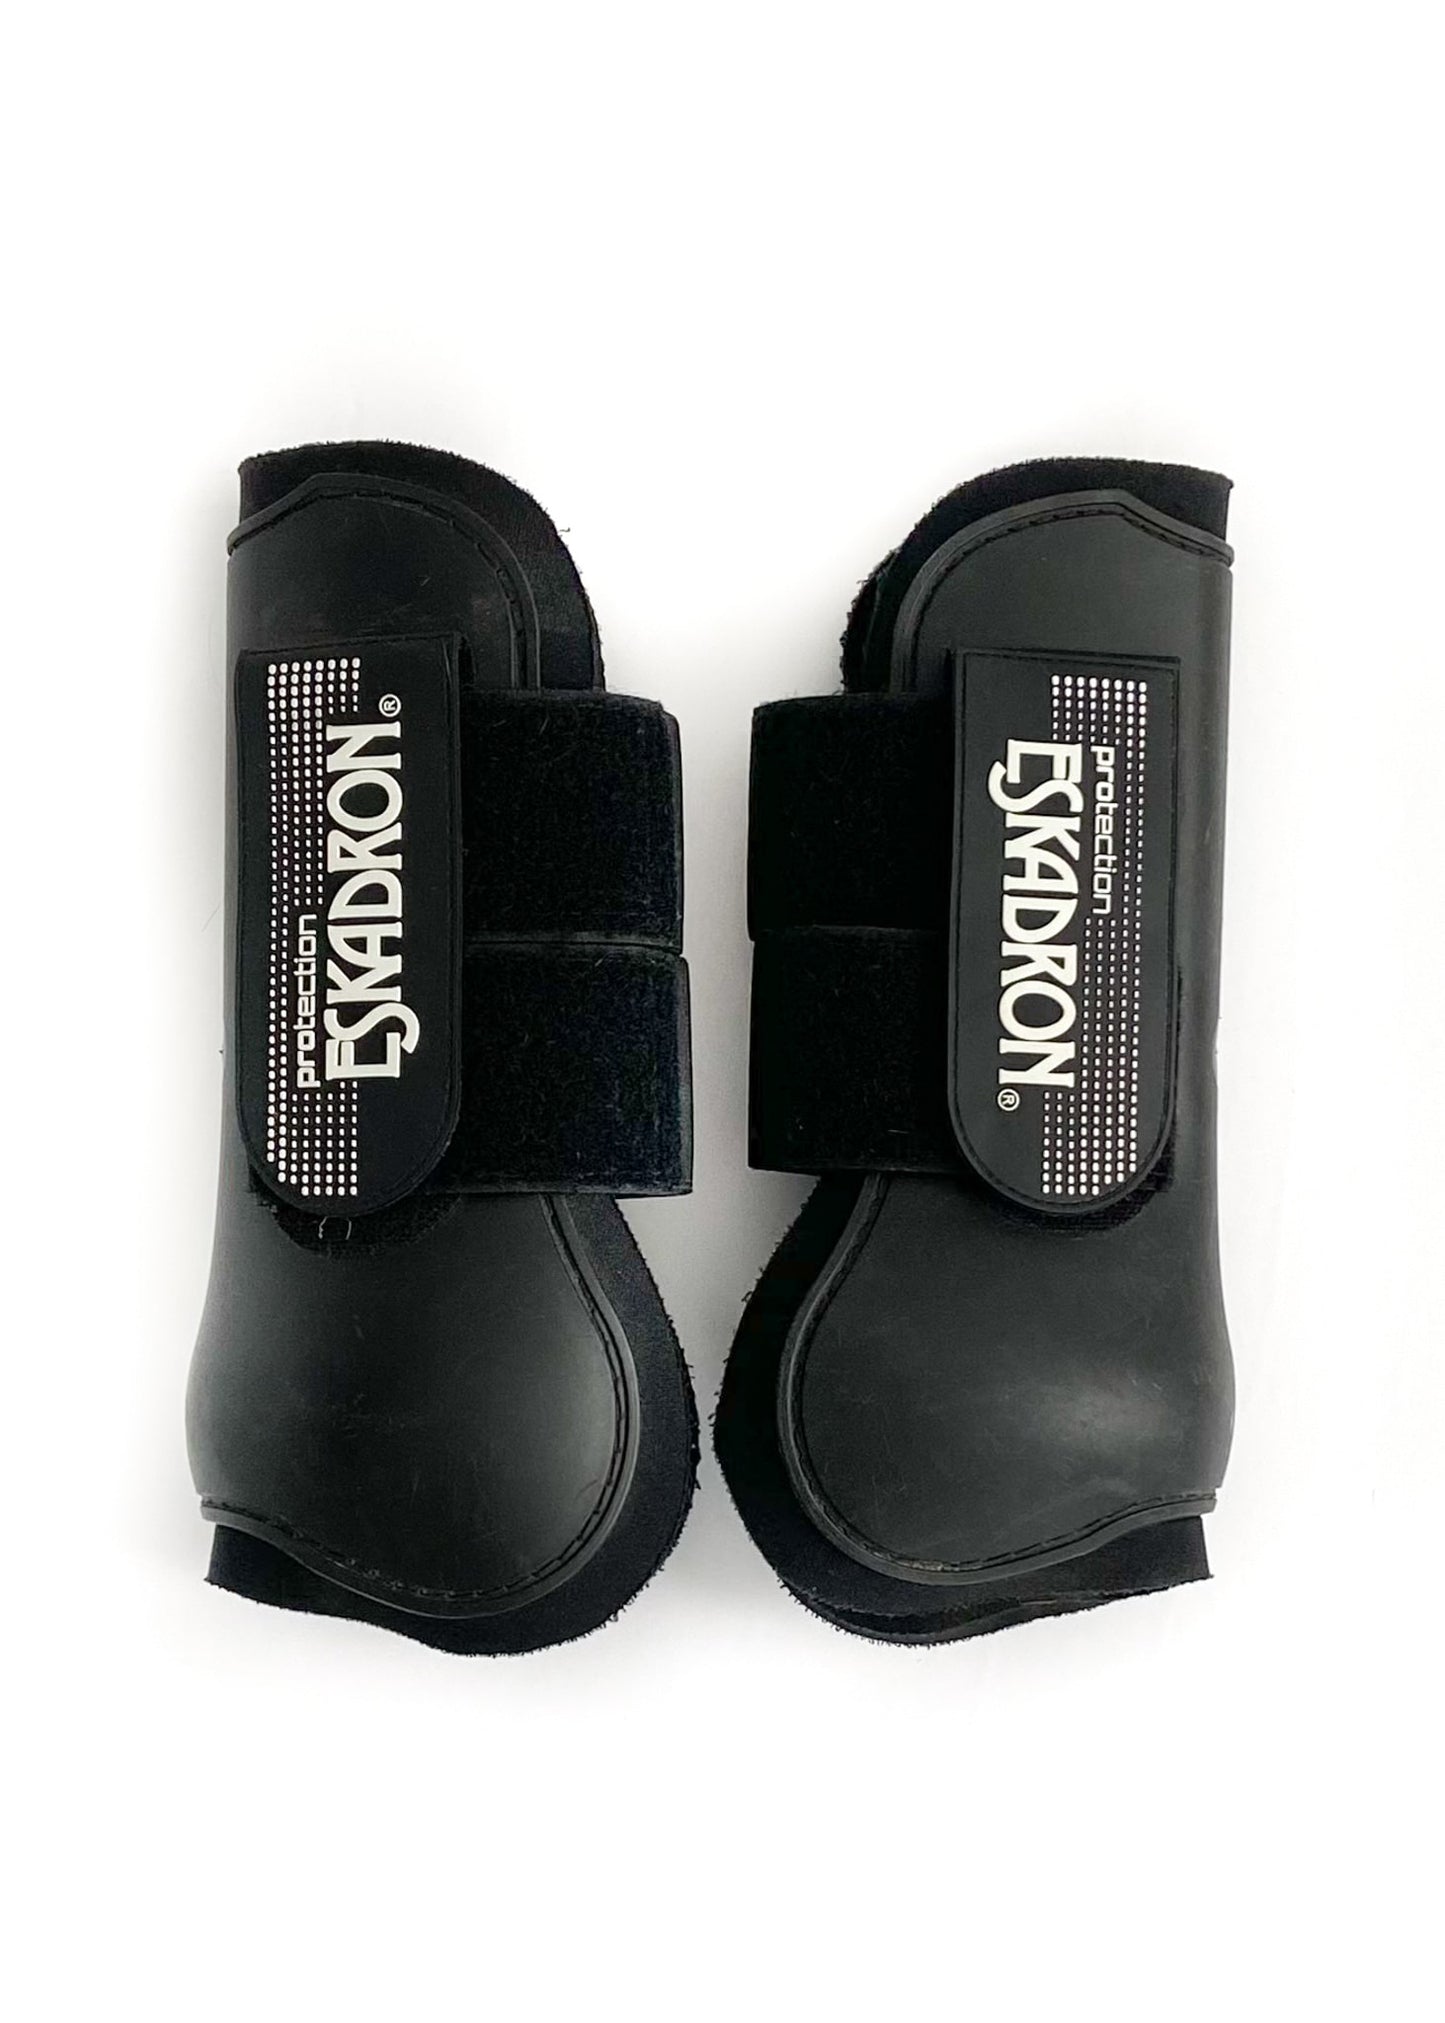 Eskadron Protection Tendon Boots - Black - Full